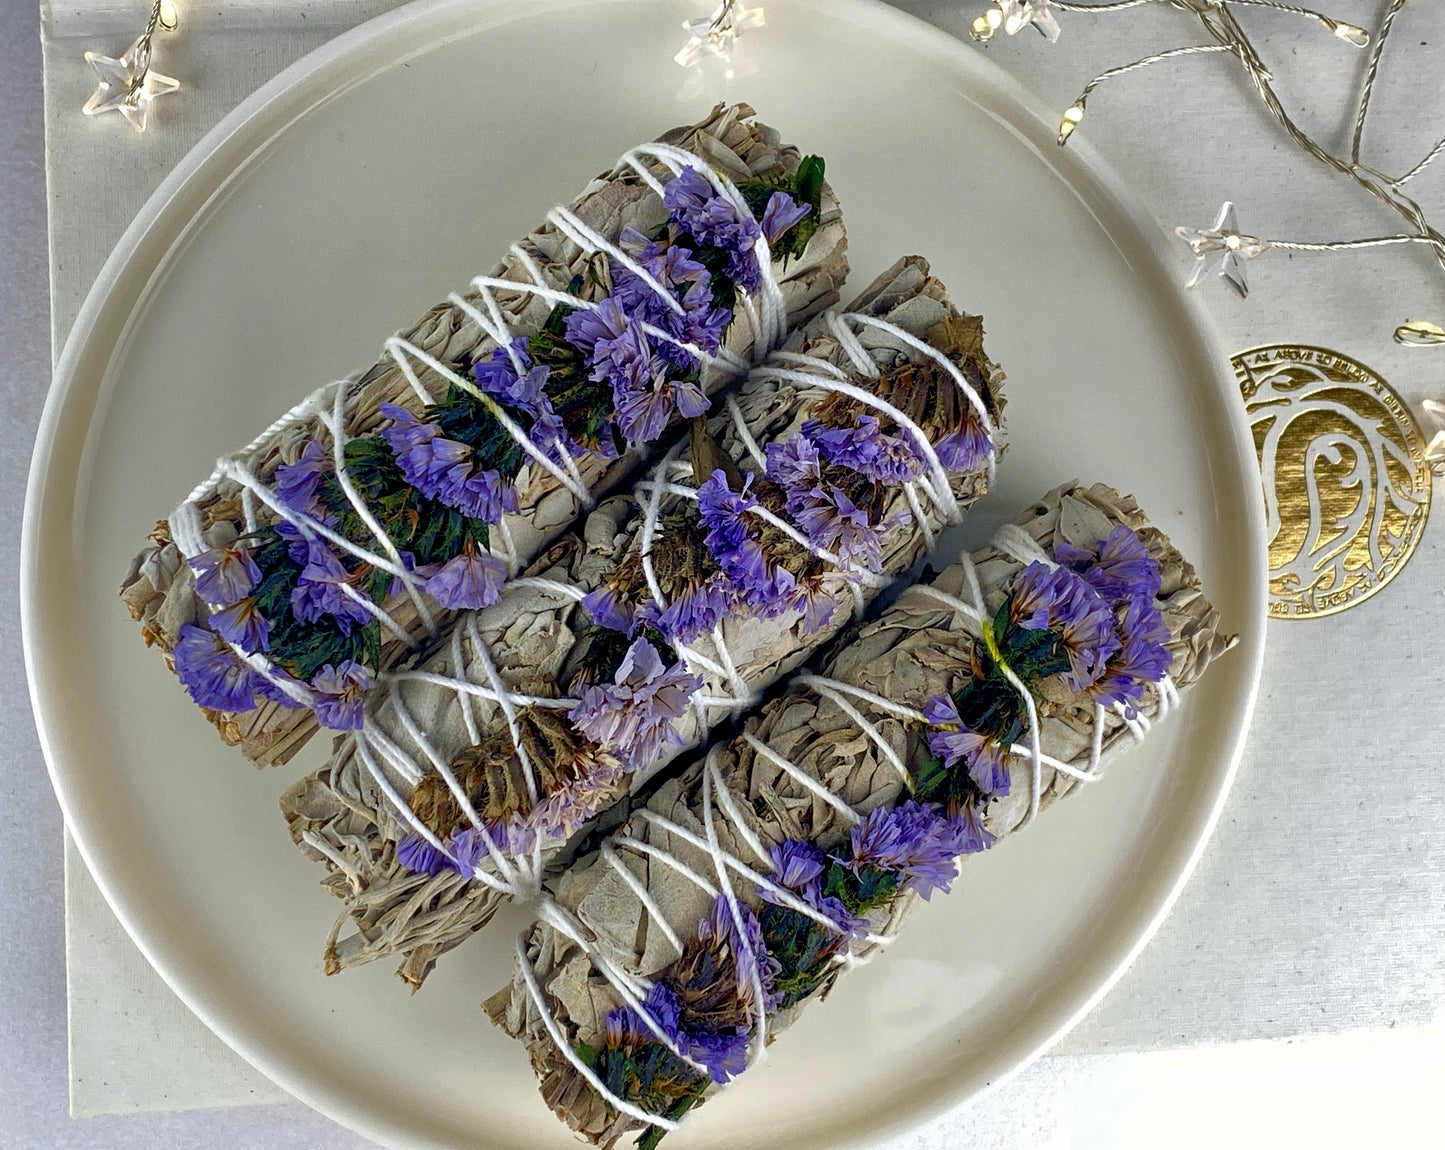 White sage smudge stick with purple flowers (Sea lavender).